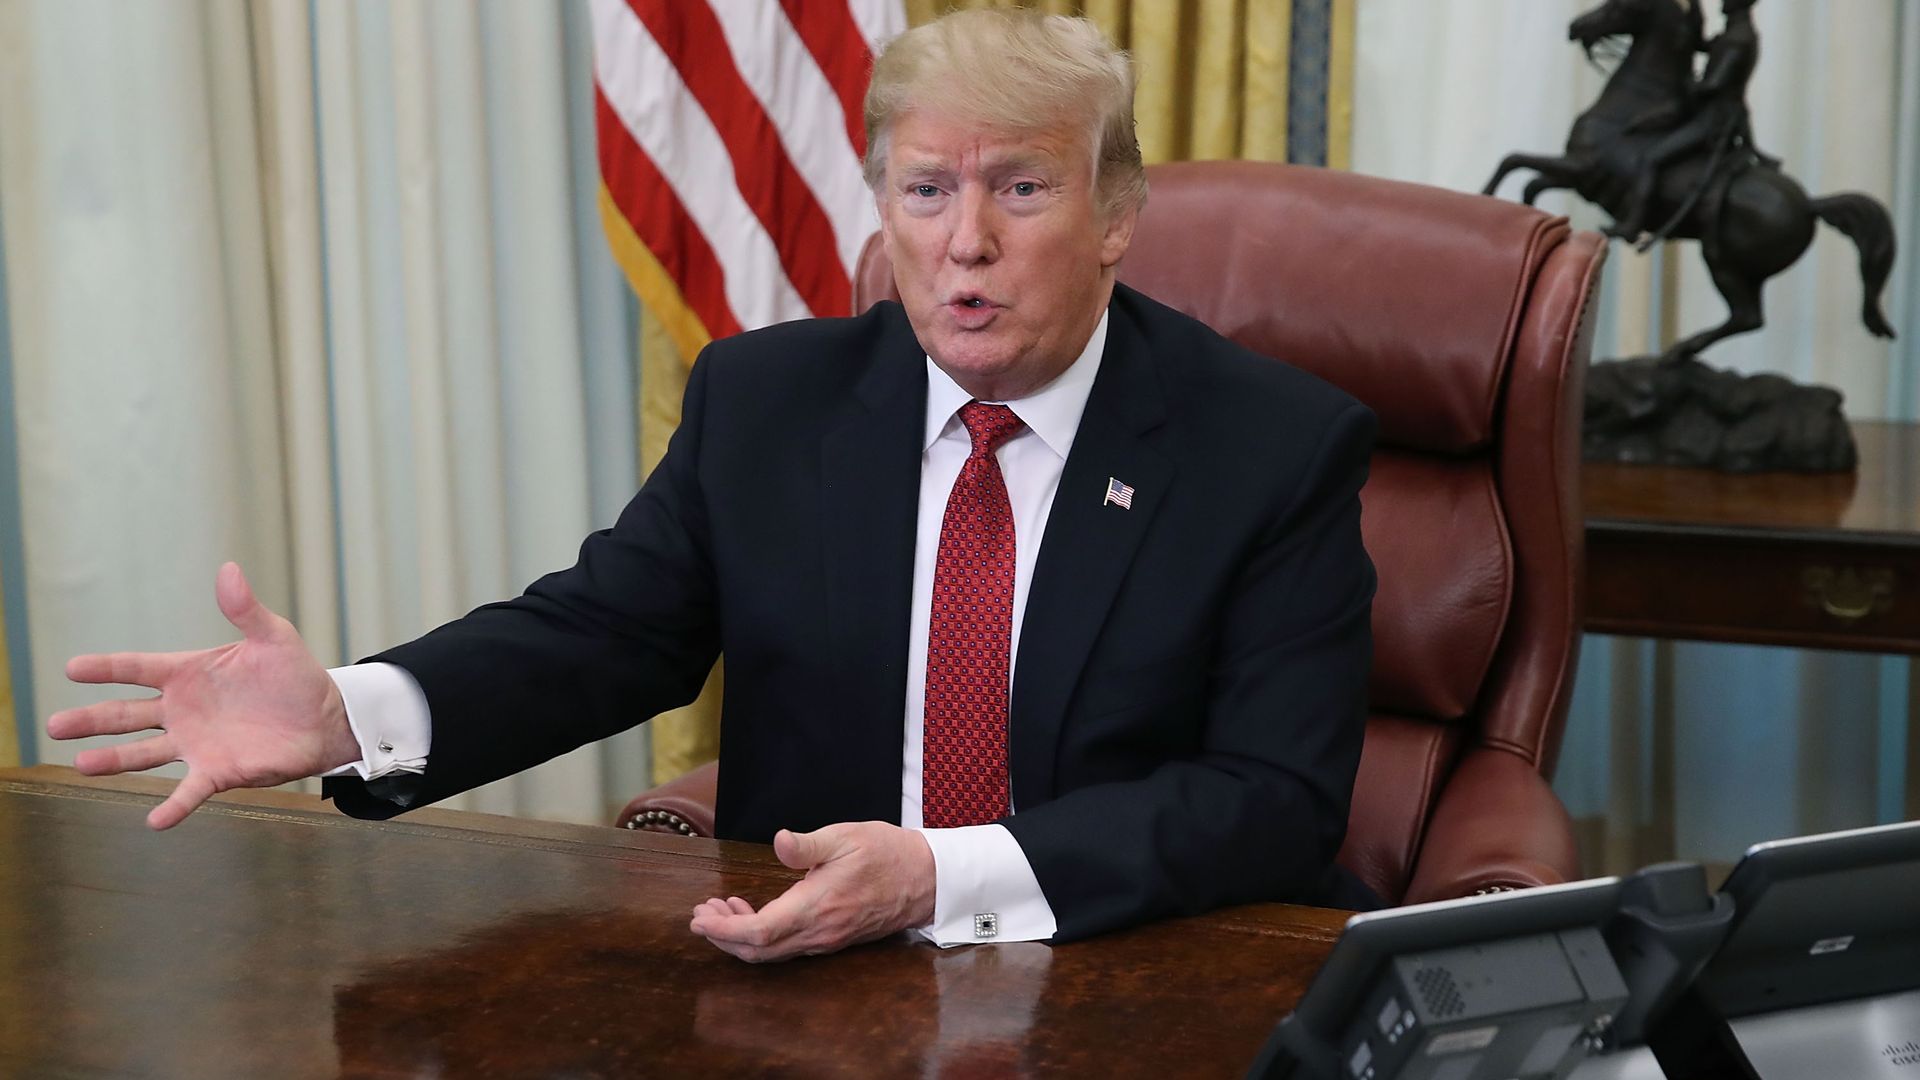 President Trump sitting at a desk